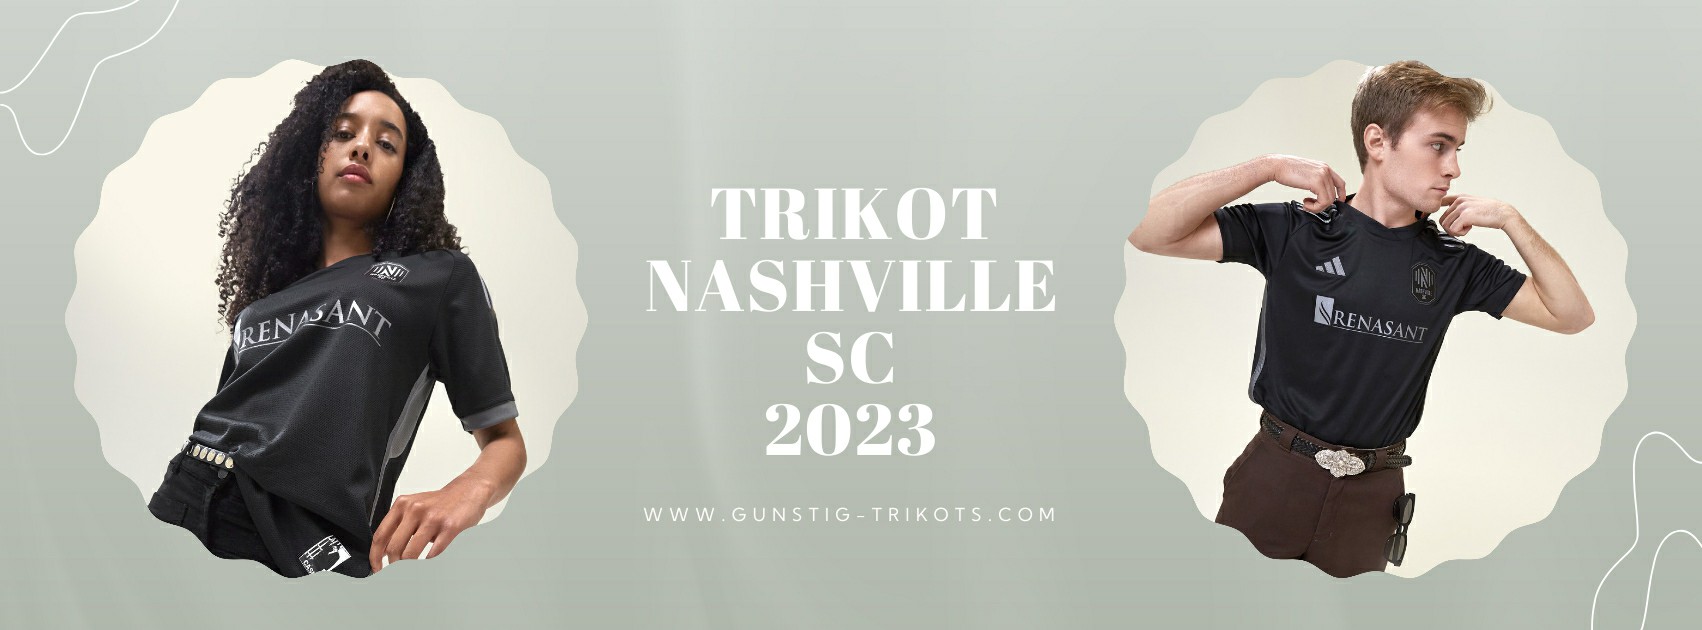 Nashville SC Trikot 2023-2024